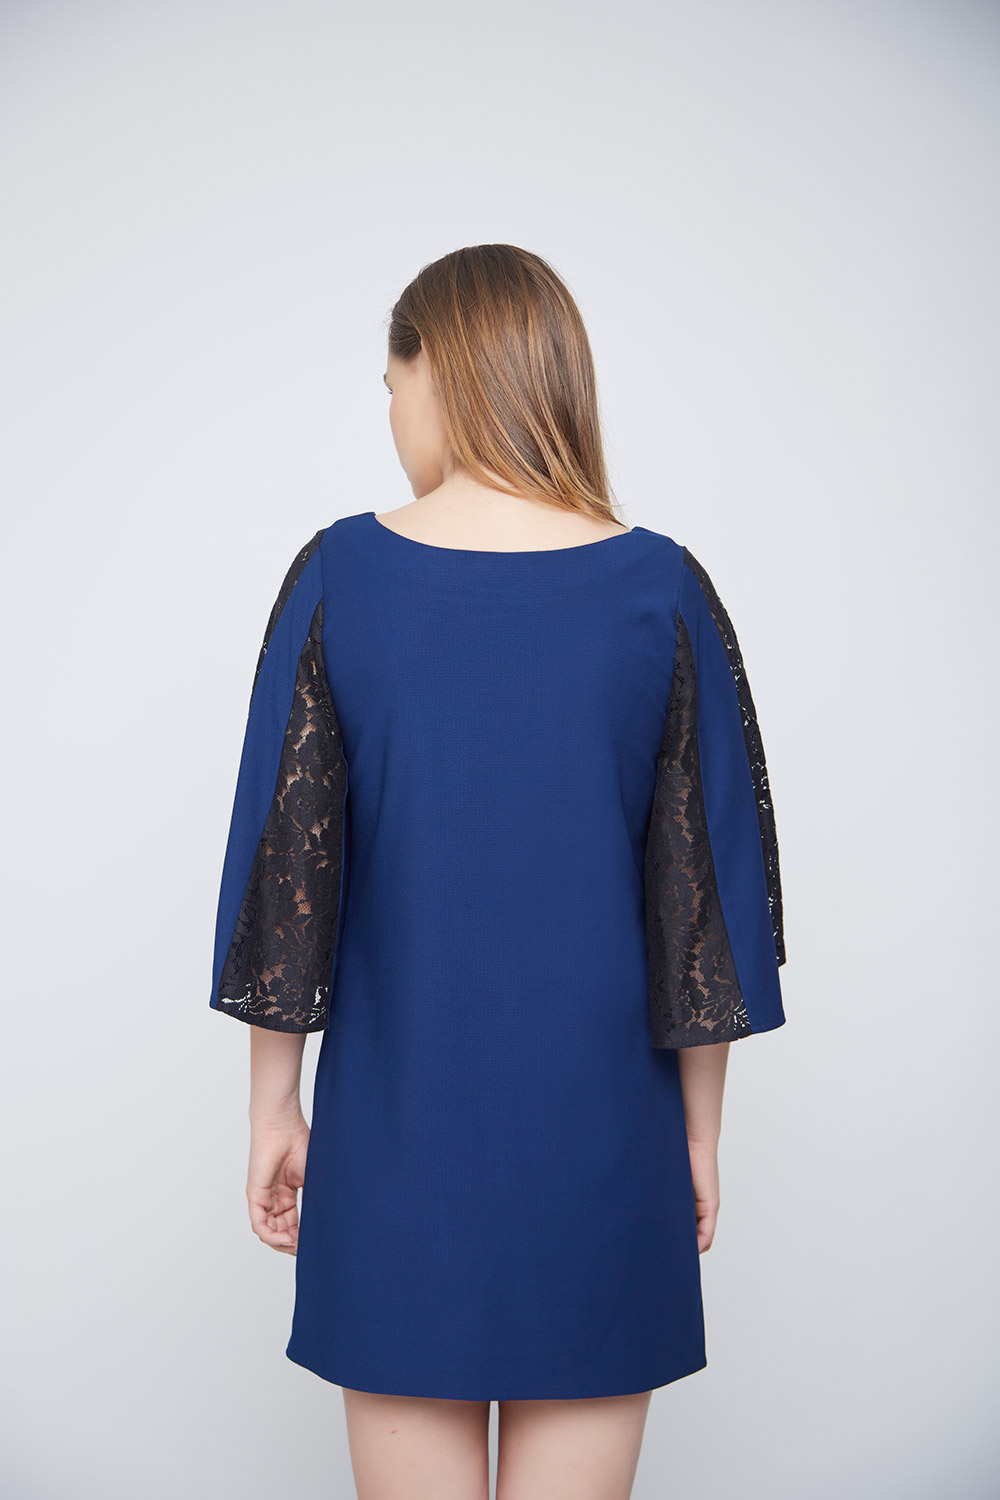 Blue Dress Black Net Pannel Sleeves -3